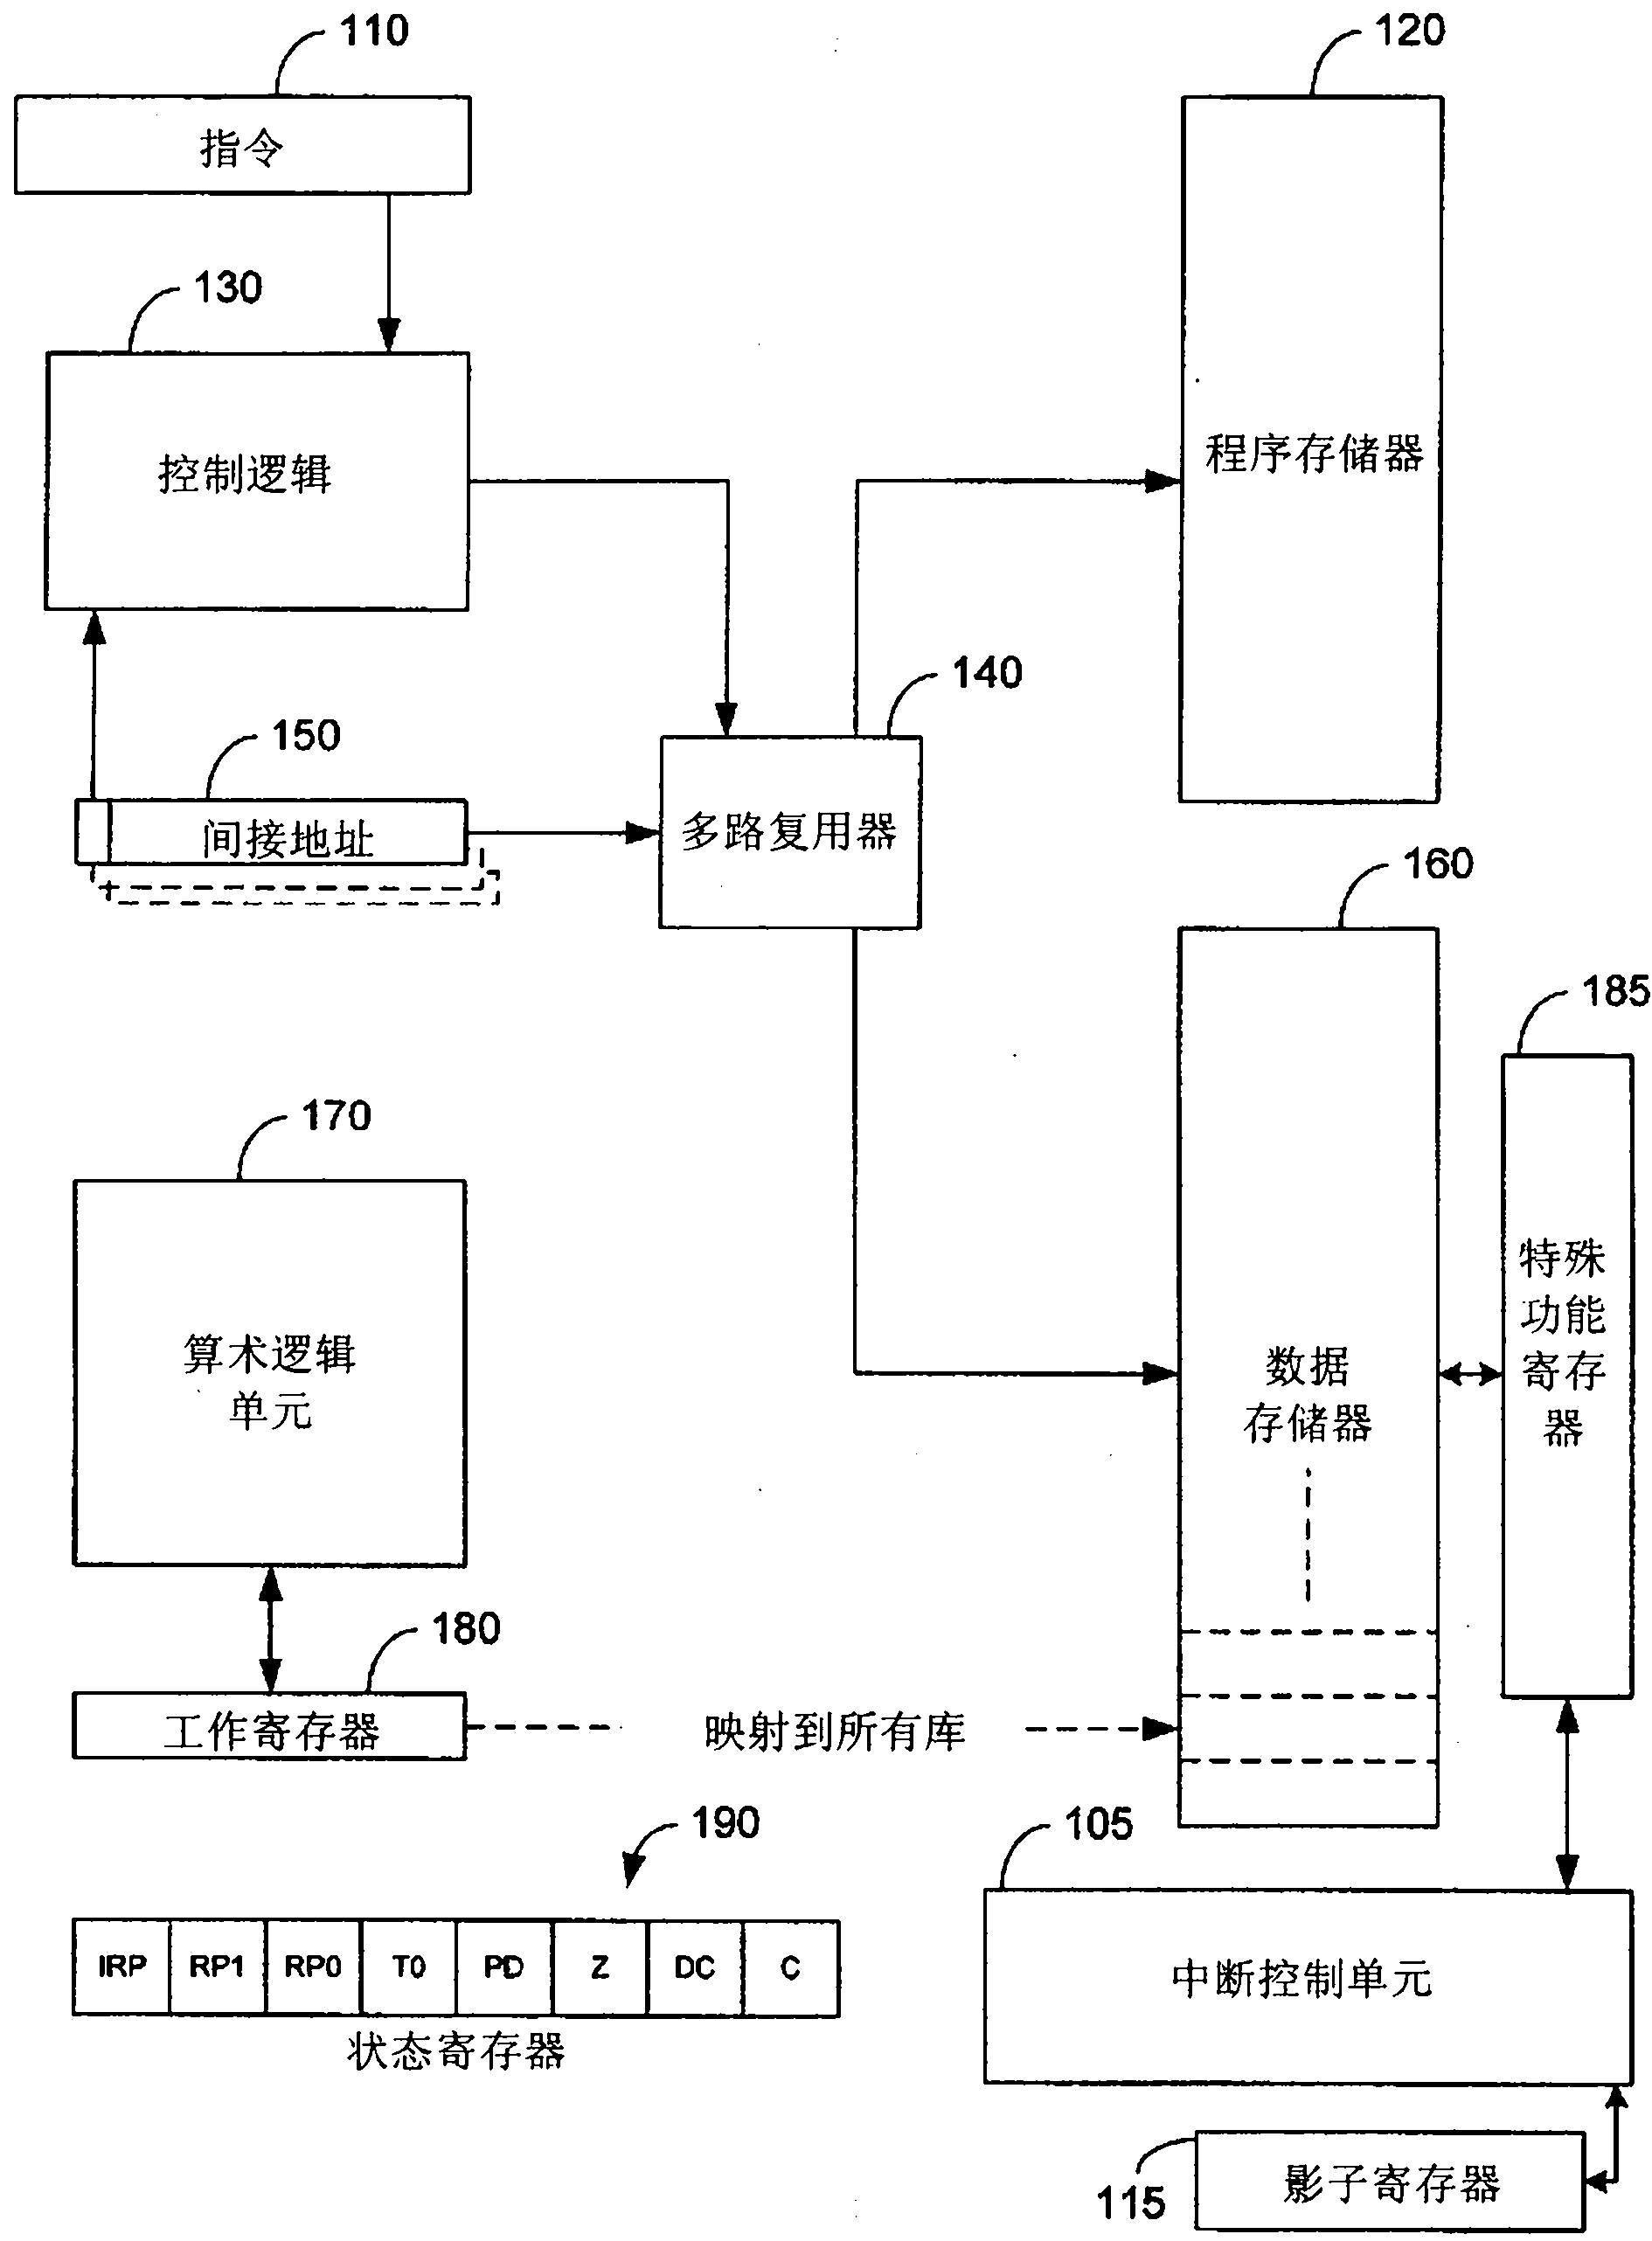 Enhanced microprocessor or microcontroller